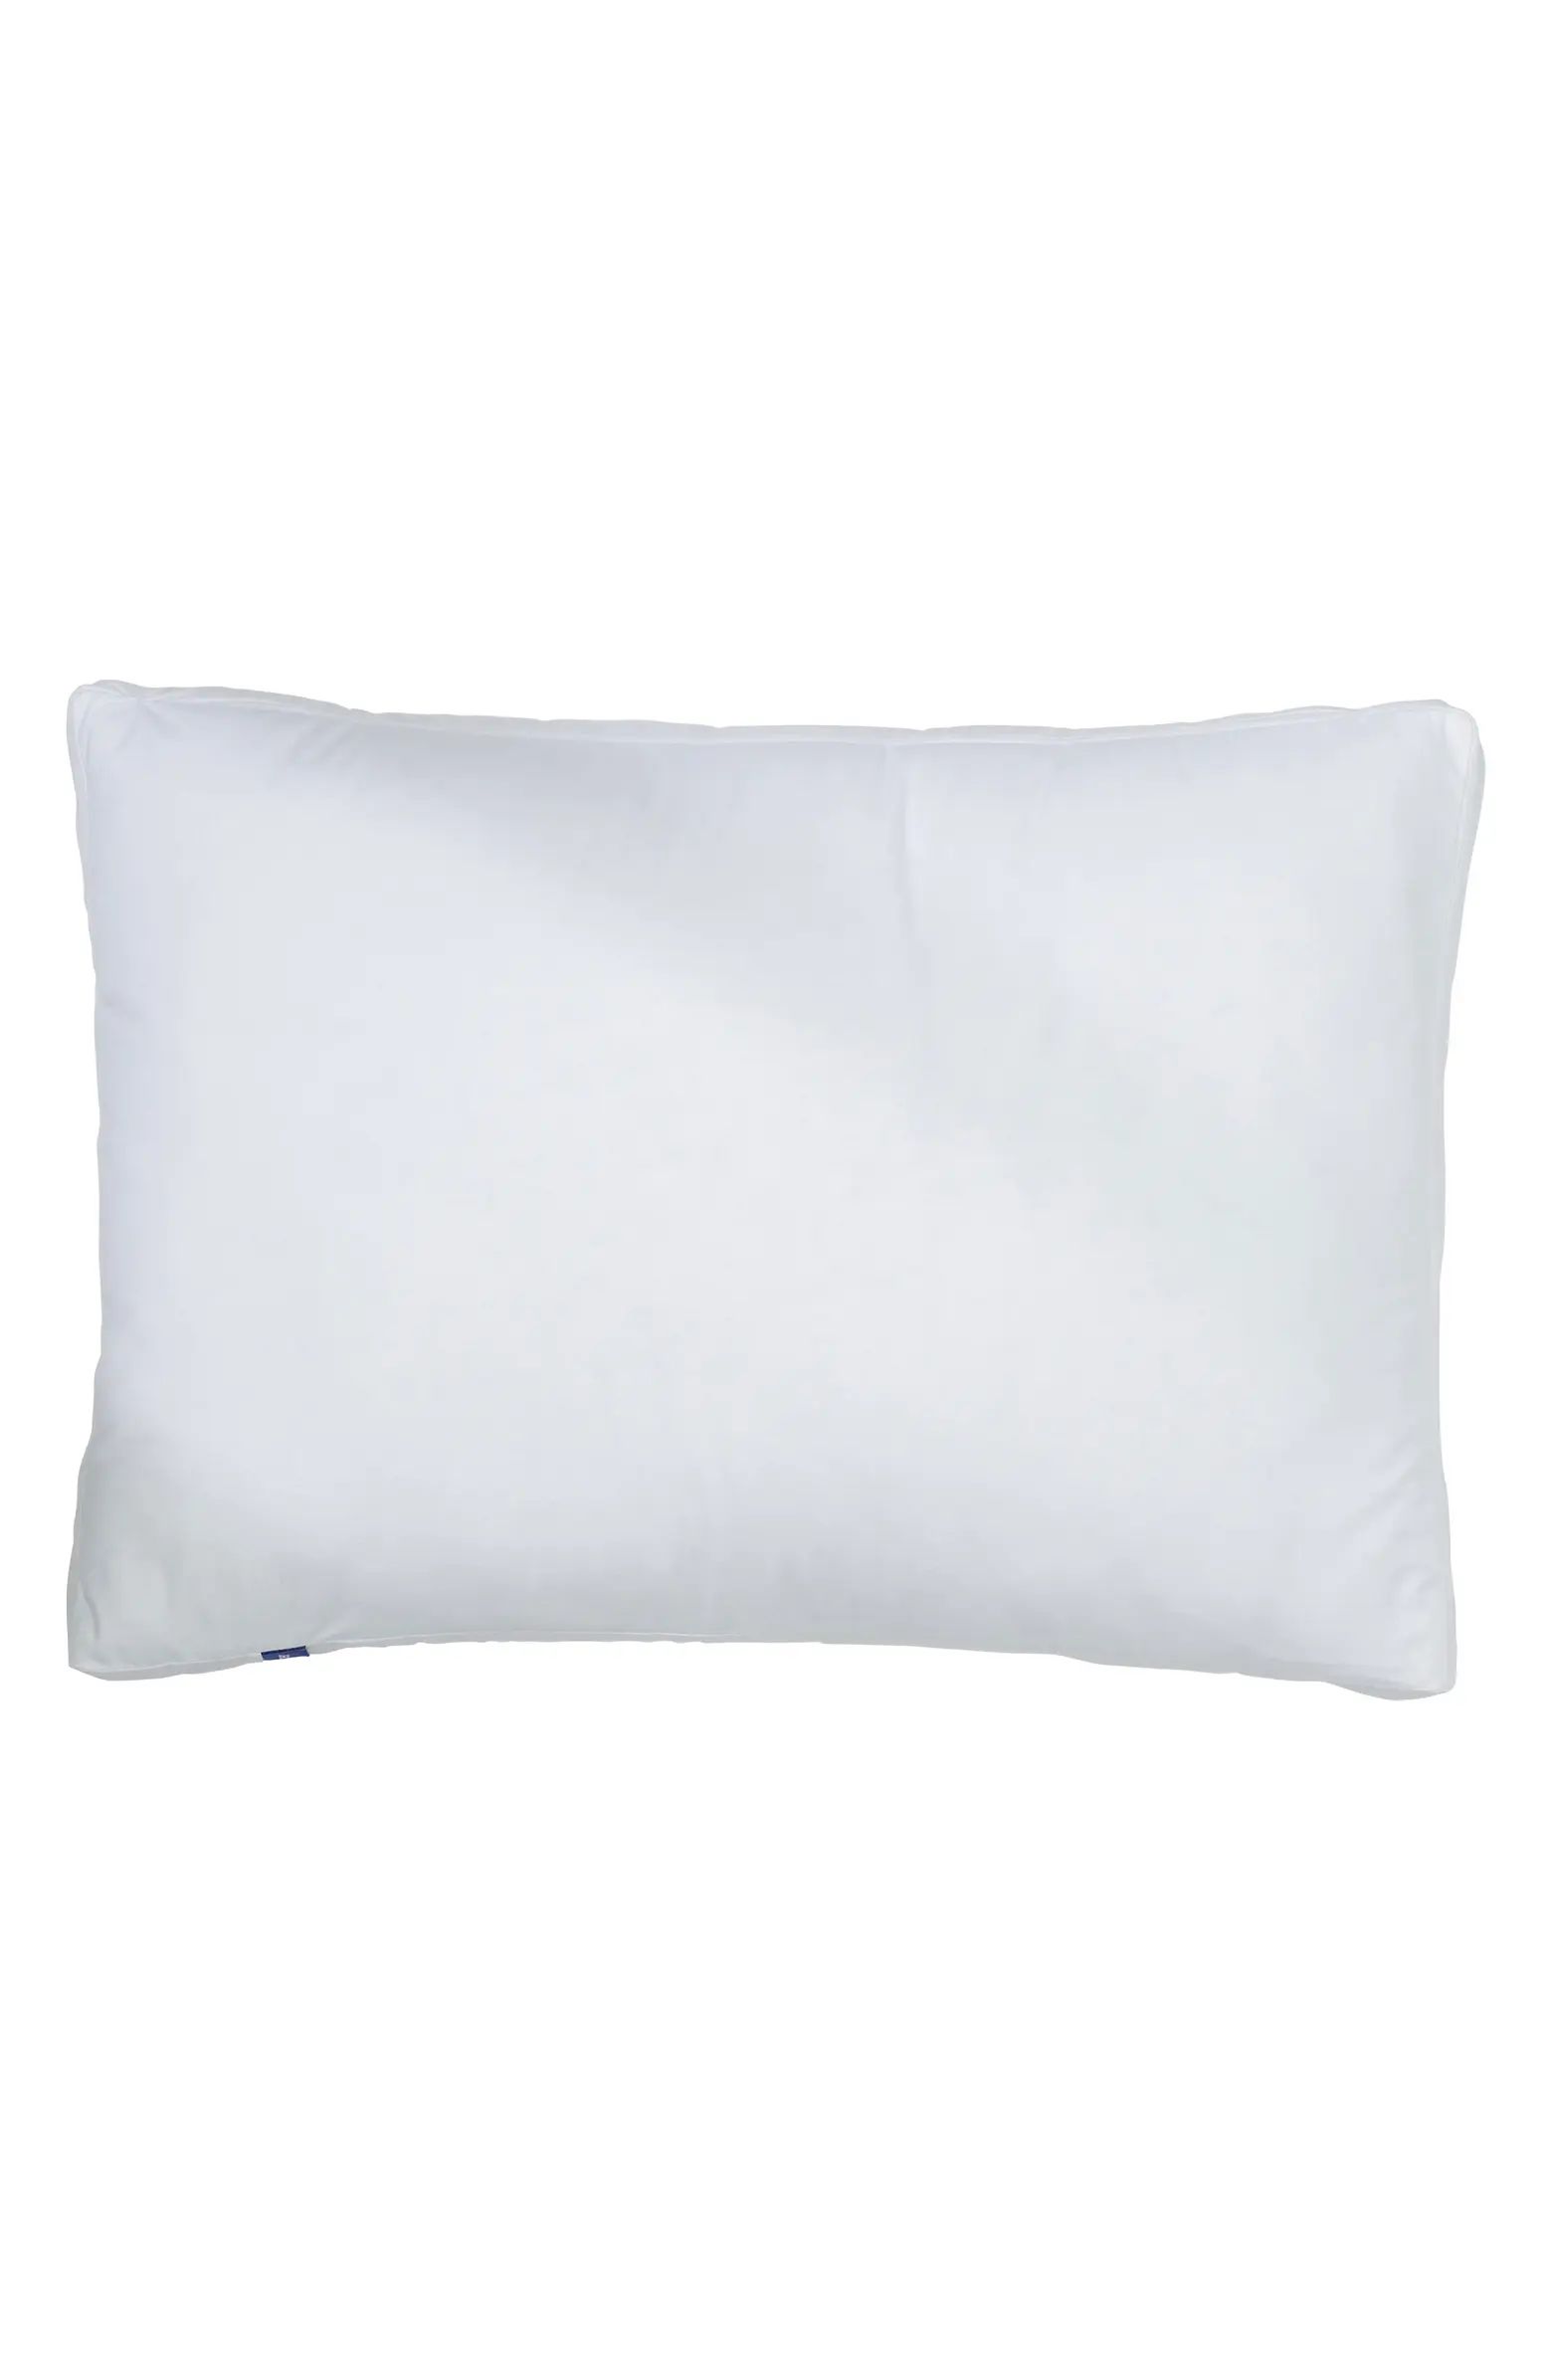 The Original Pillow | Nordstrom